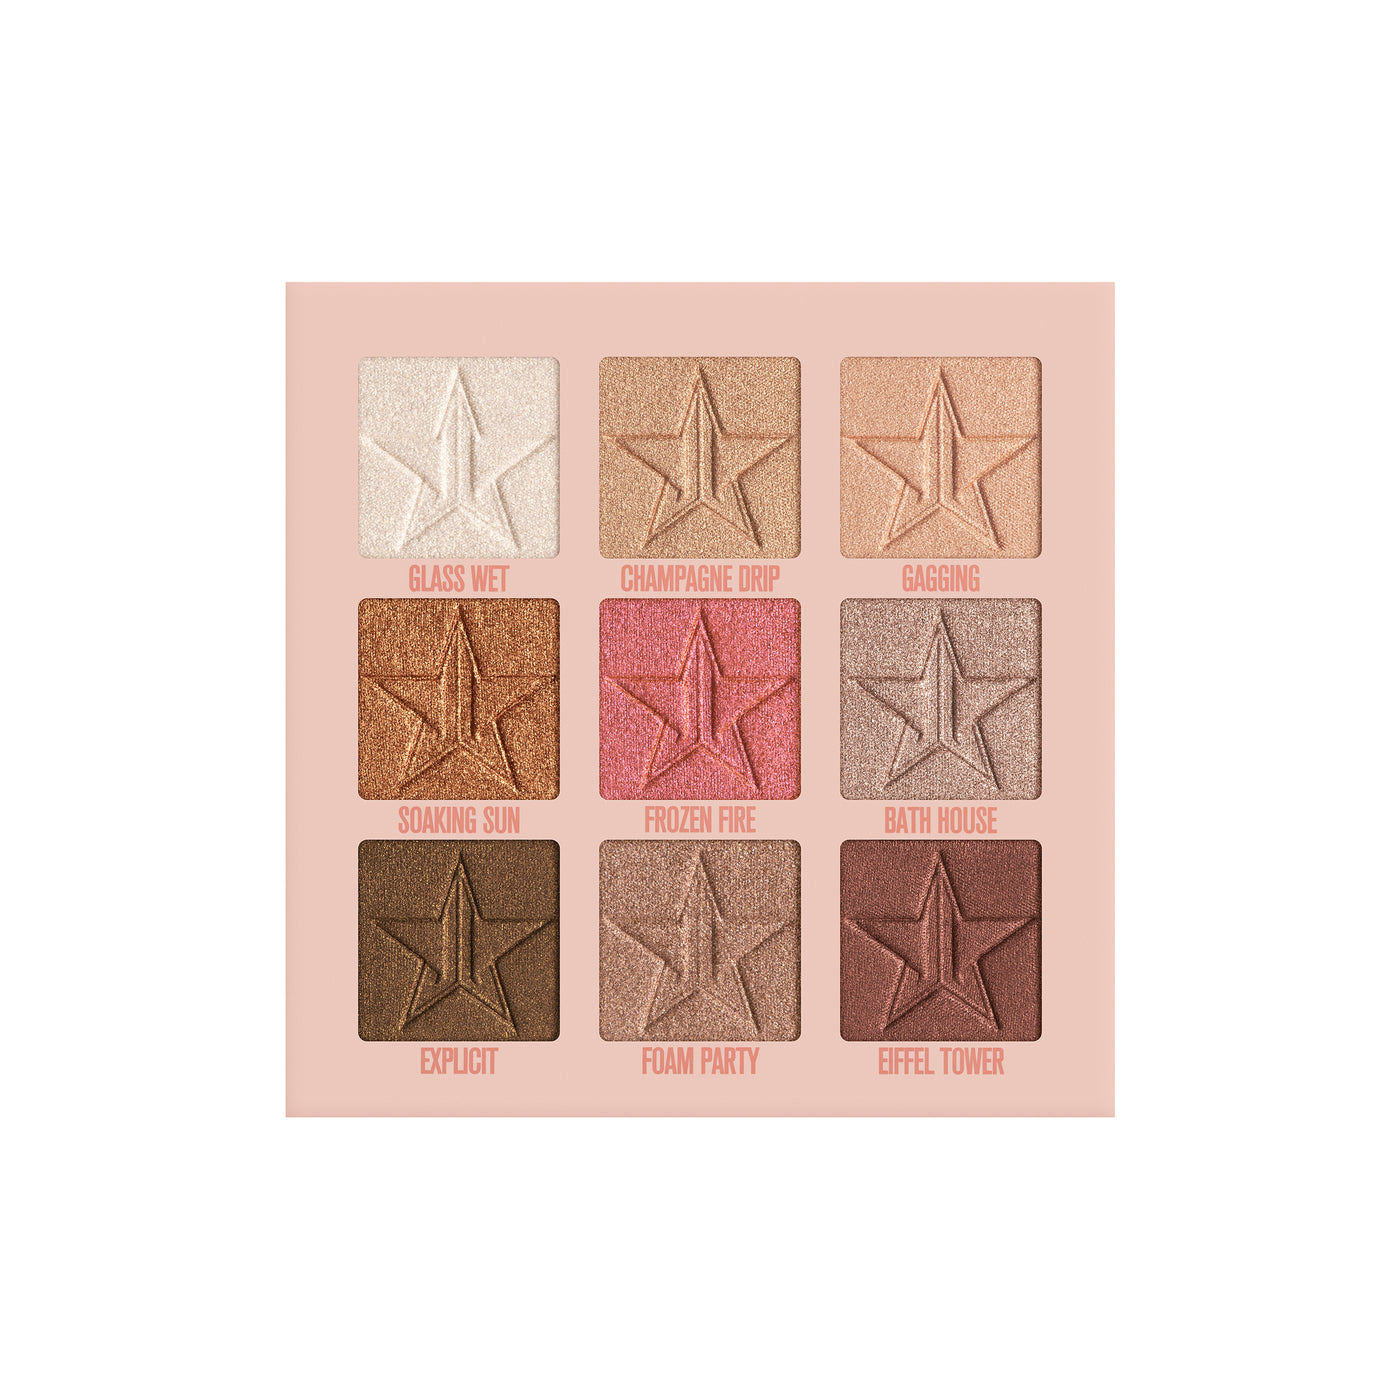 Jeffree Star Cosmetics - Mini Orgy Palette